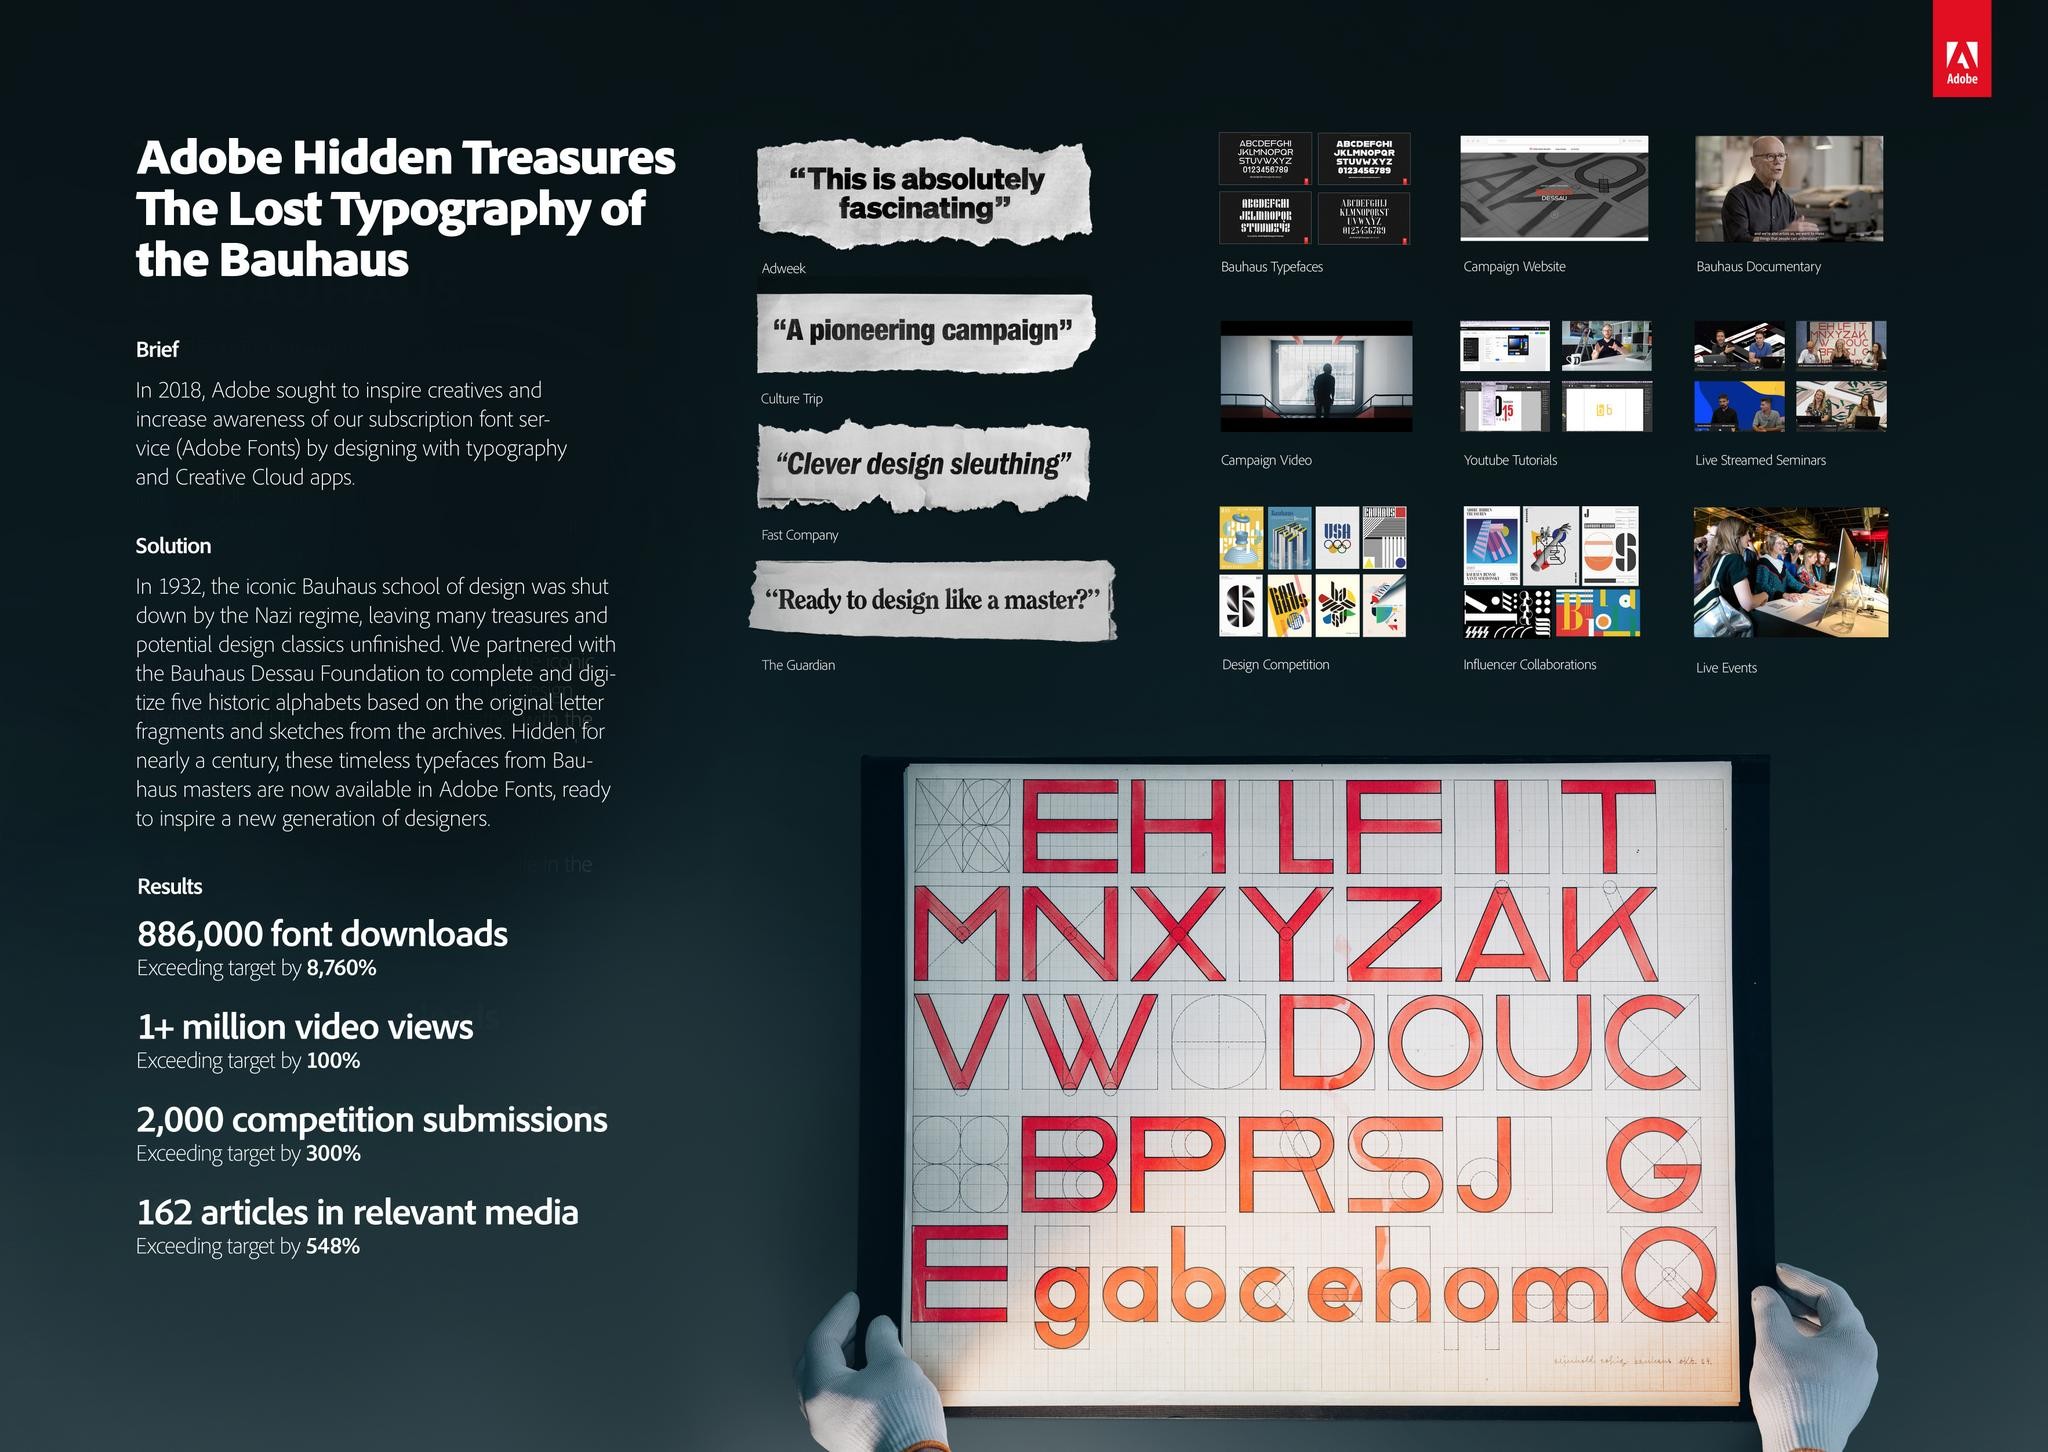 Adobe Hidden Treasures: The Lost Typography of the Bauhaus